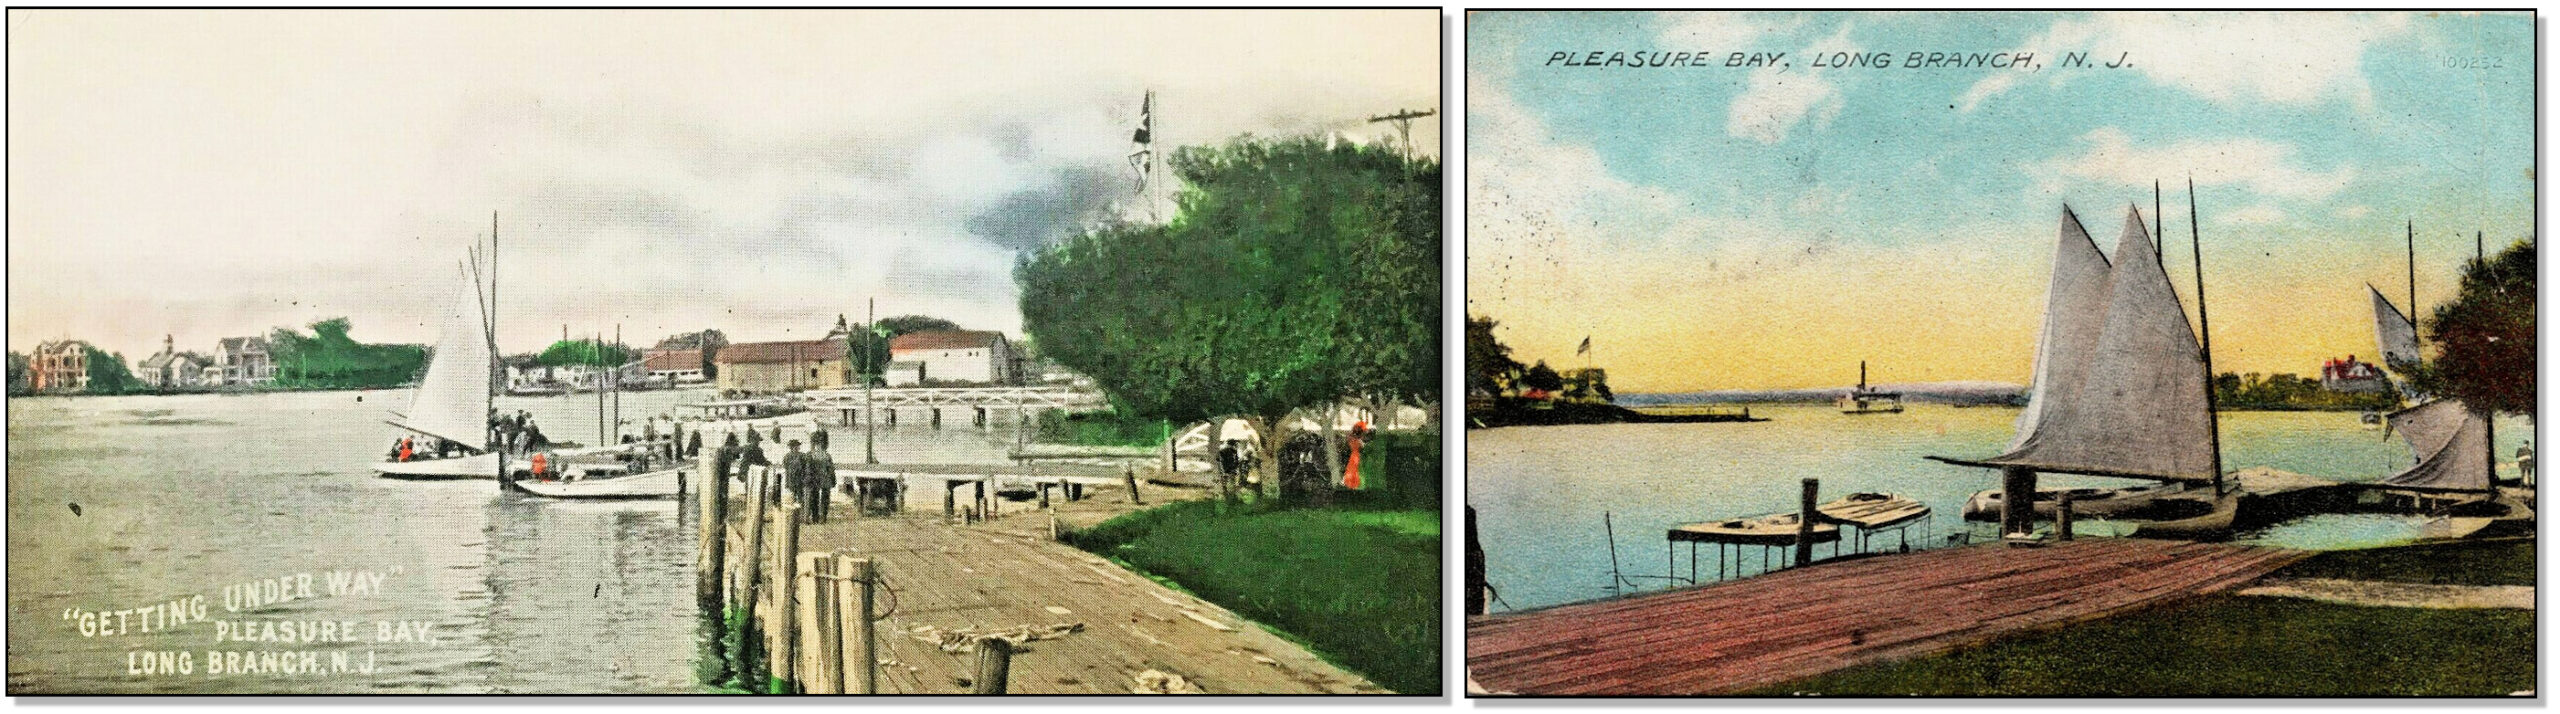 Postcards showing catboats on Pleasure Bay. Public Domain.